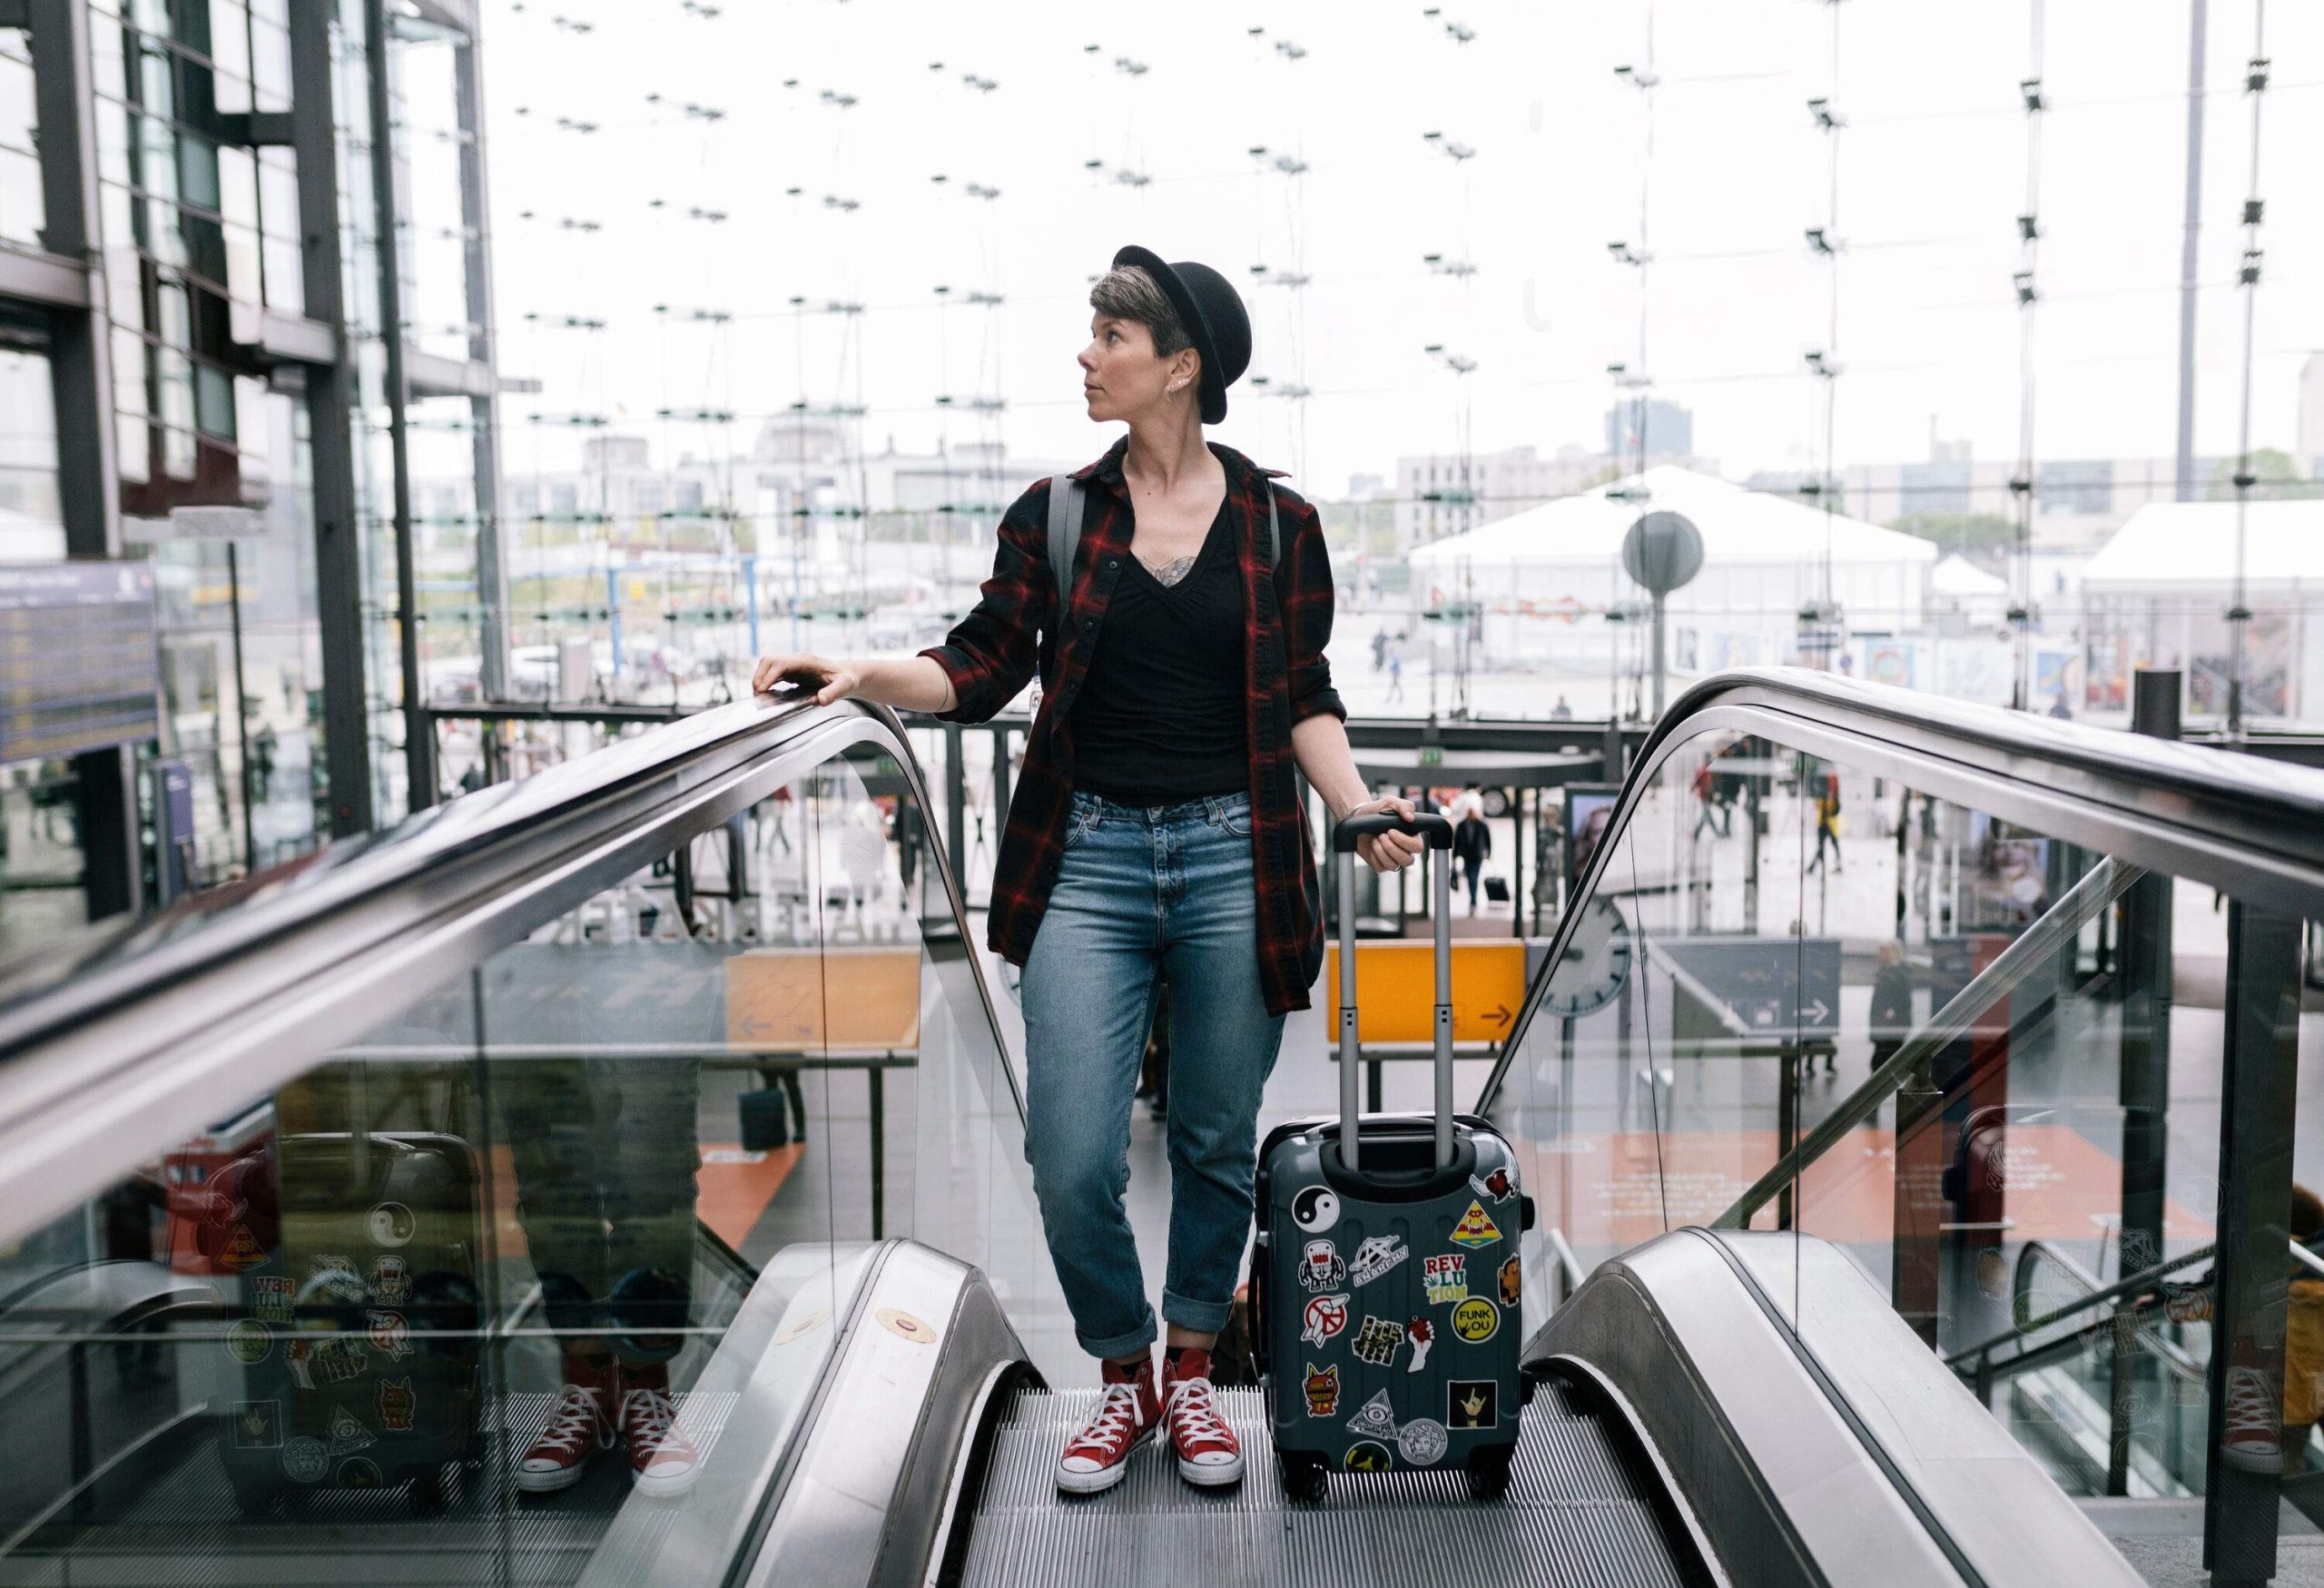 A woman with a suitcase riding an escalator.